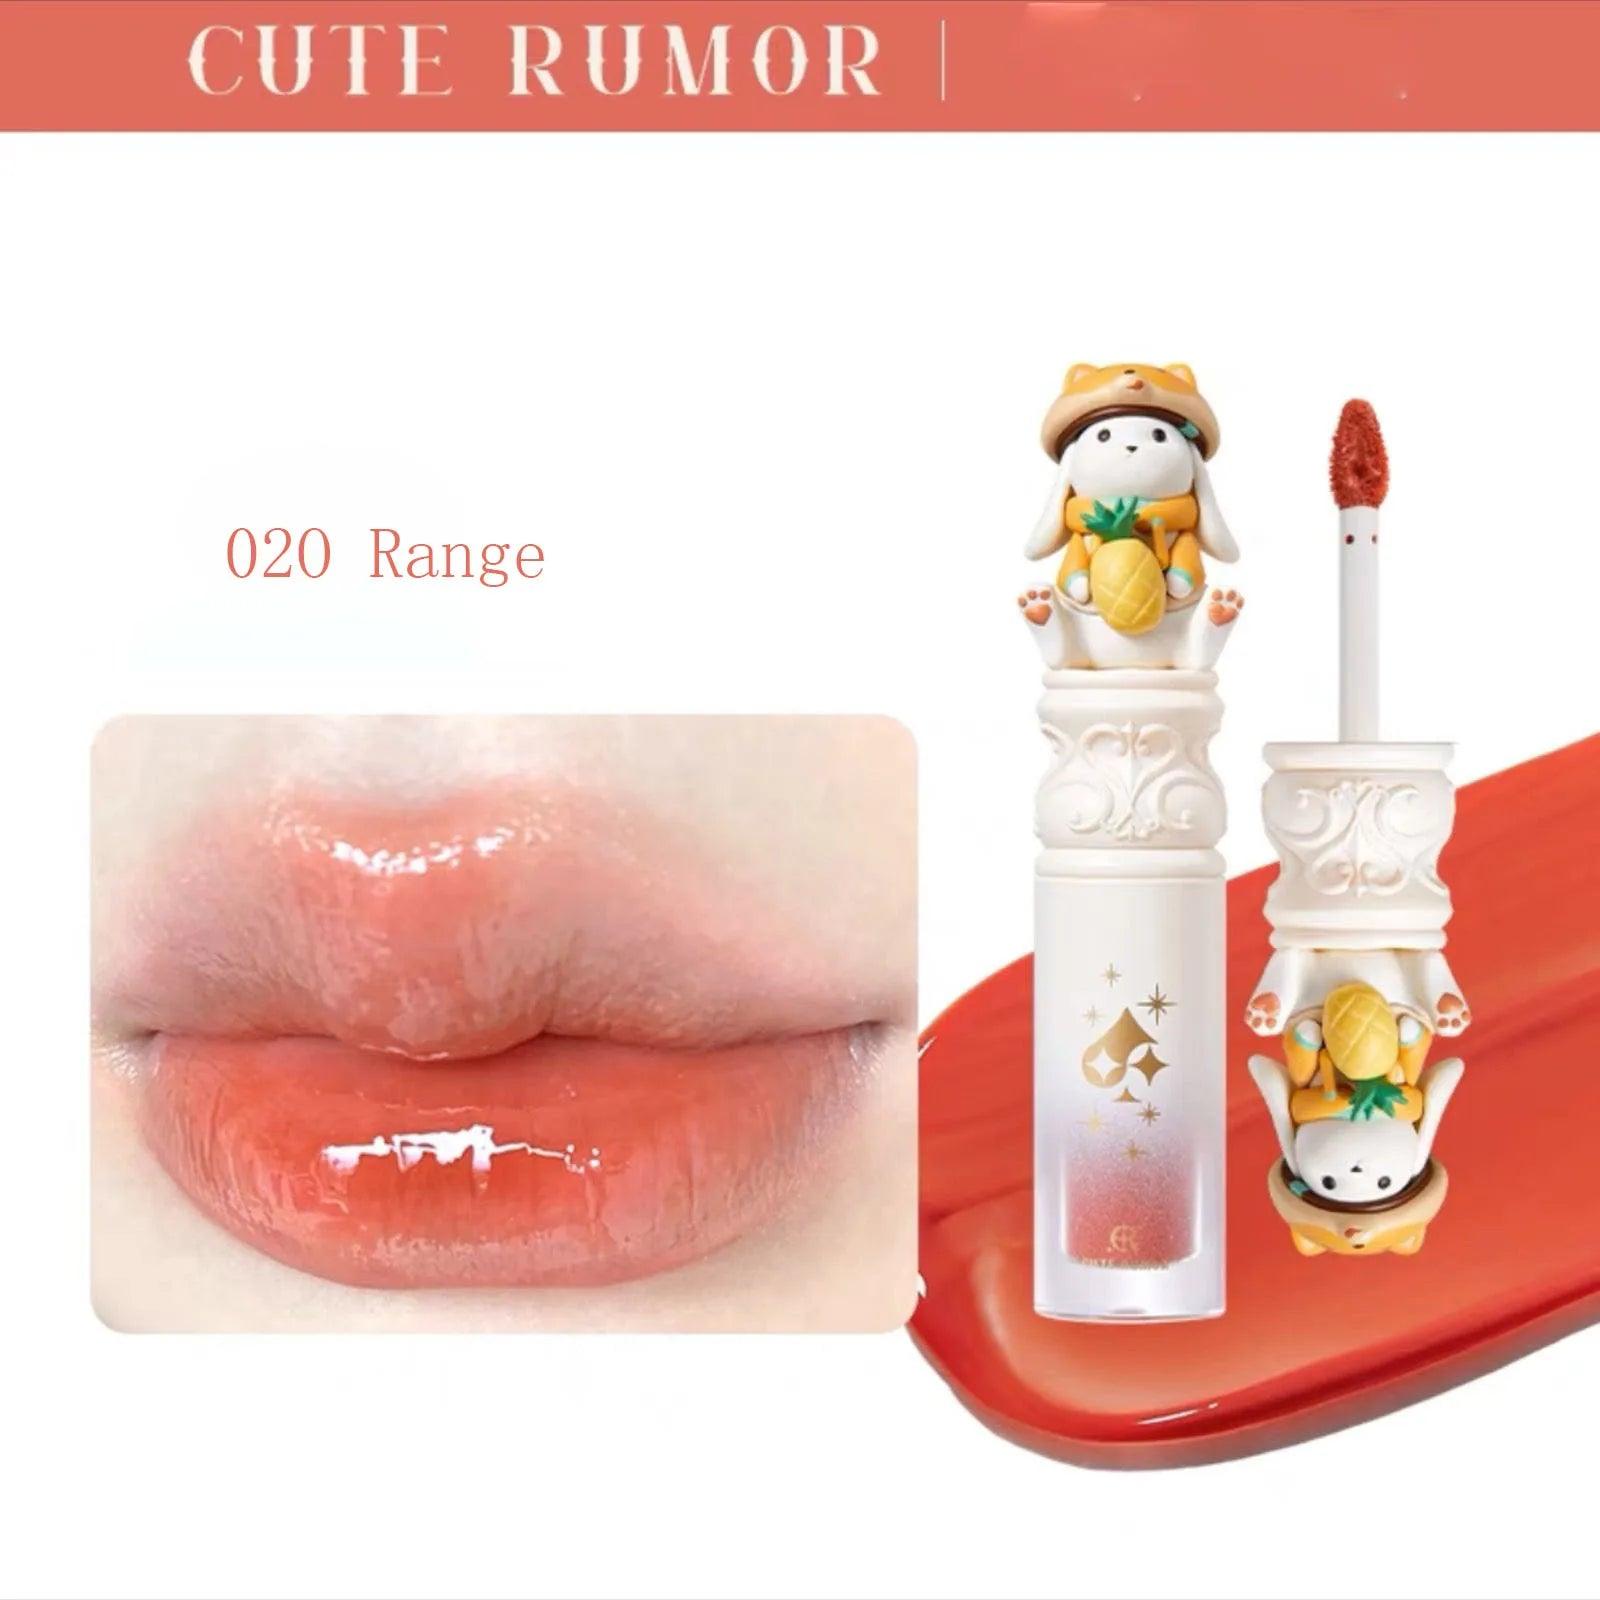 cute rumor cosmetics: plumping, long-lasting, perfect gift.